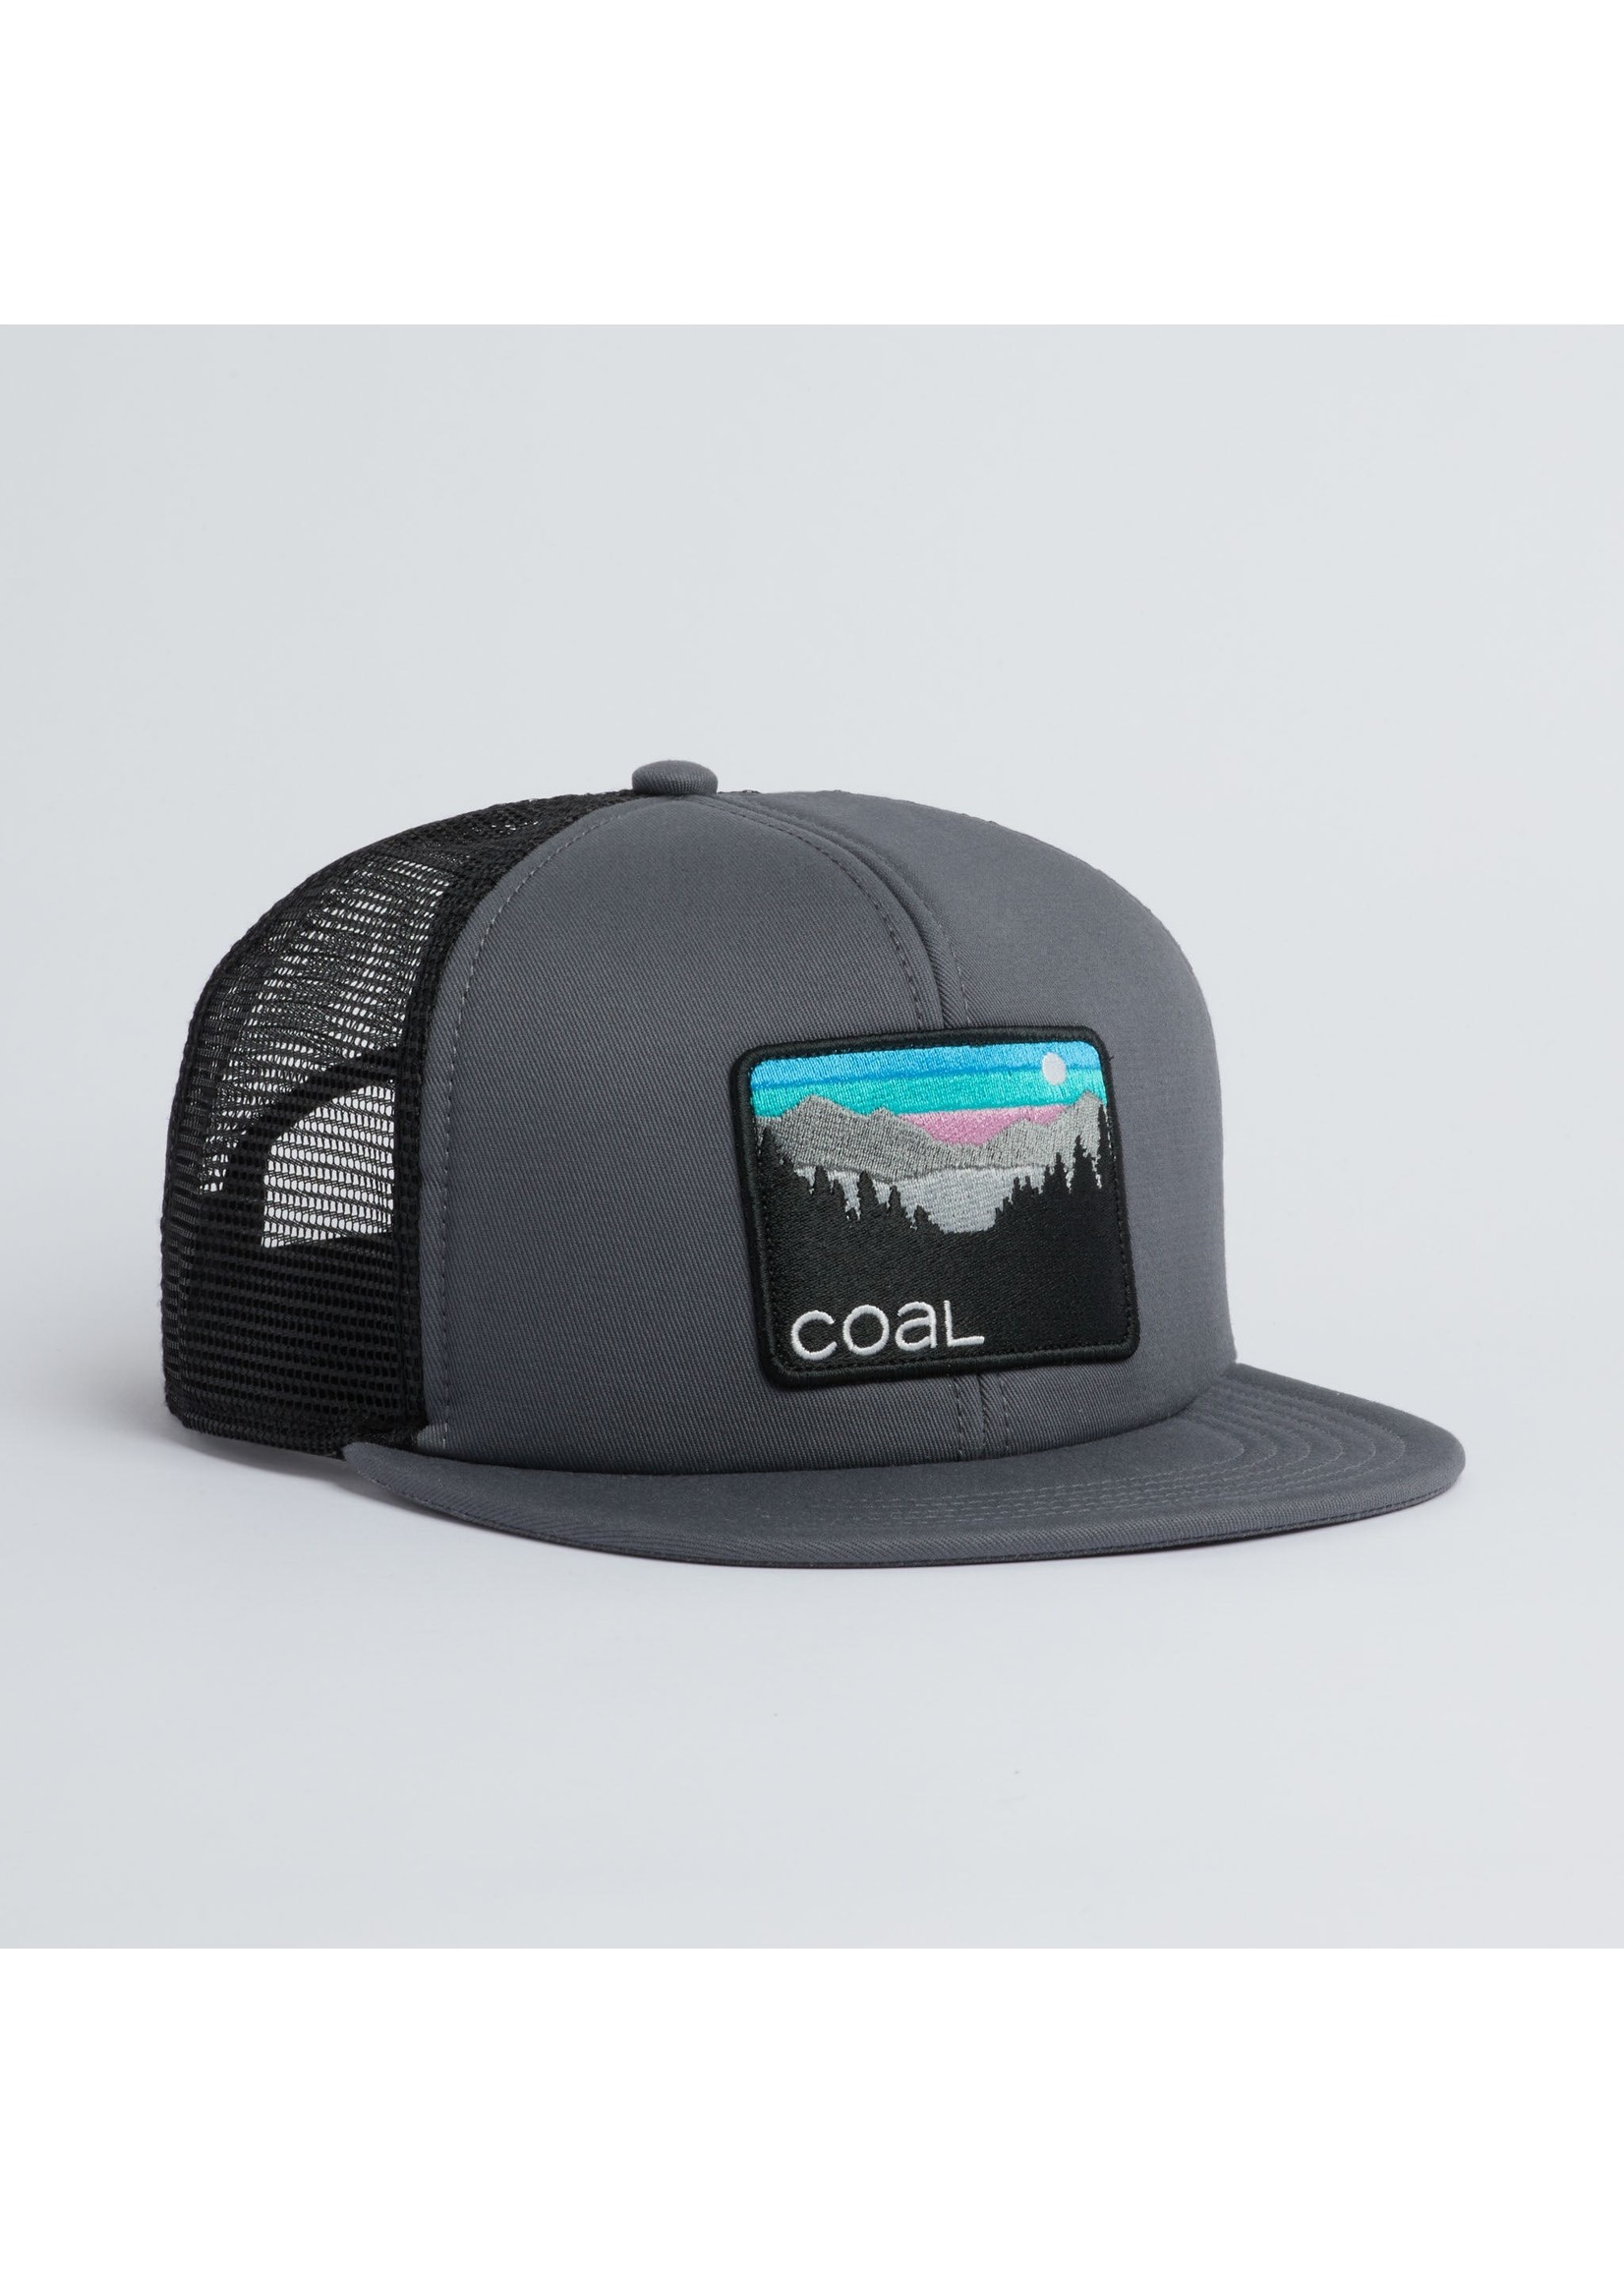 Coal Headwear Hauler (Trucker)